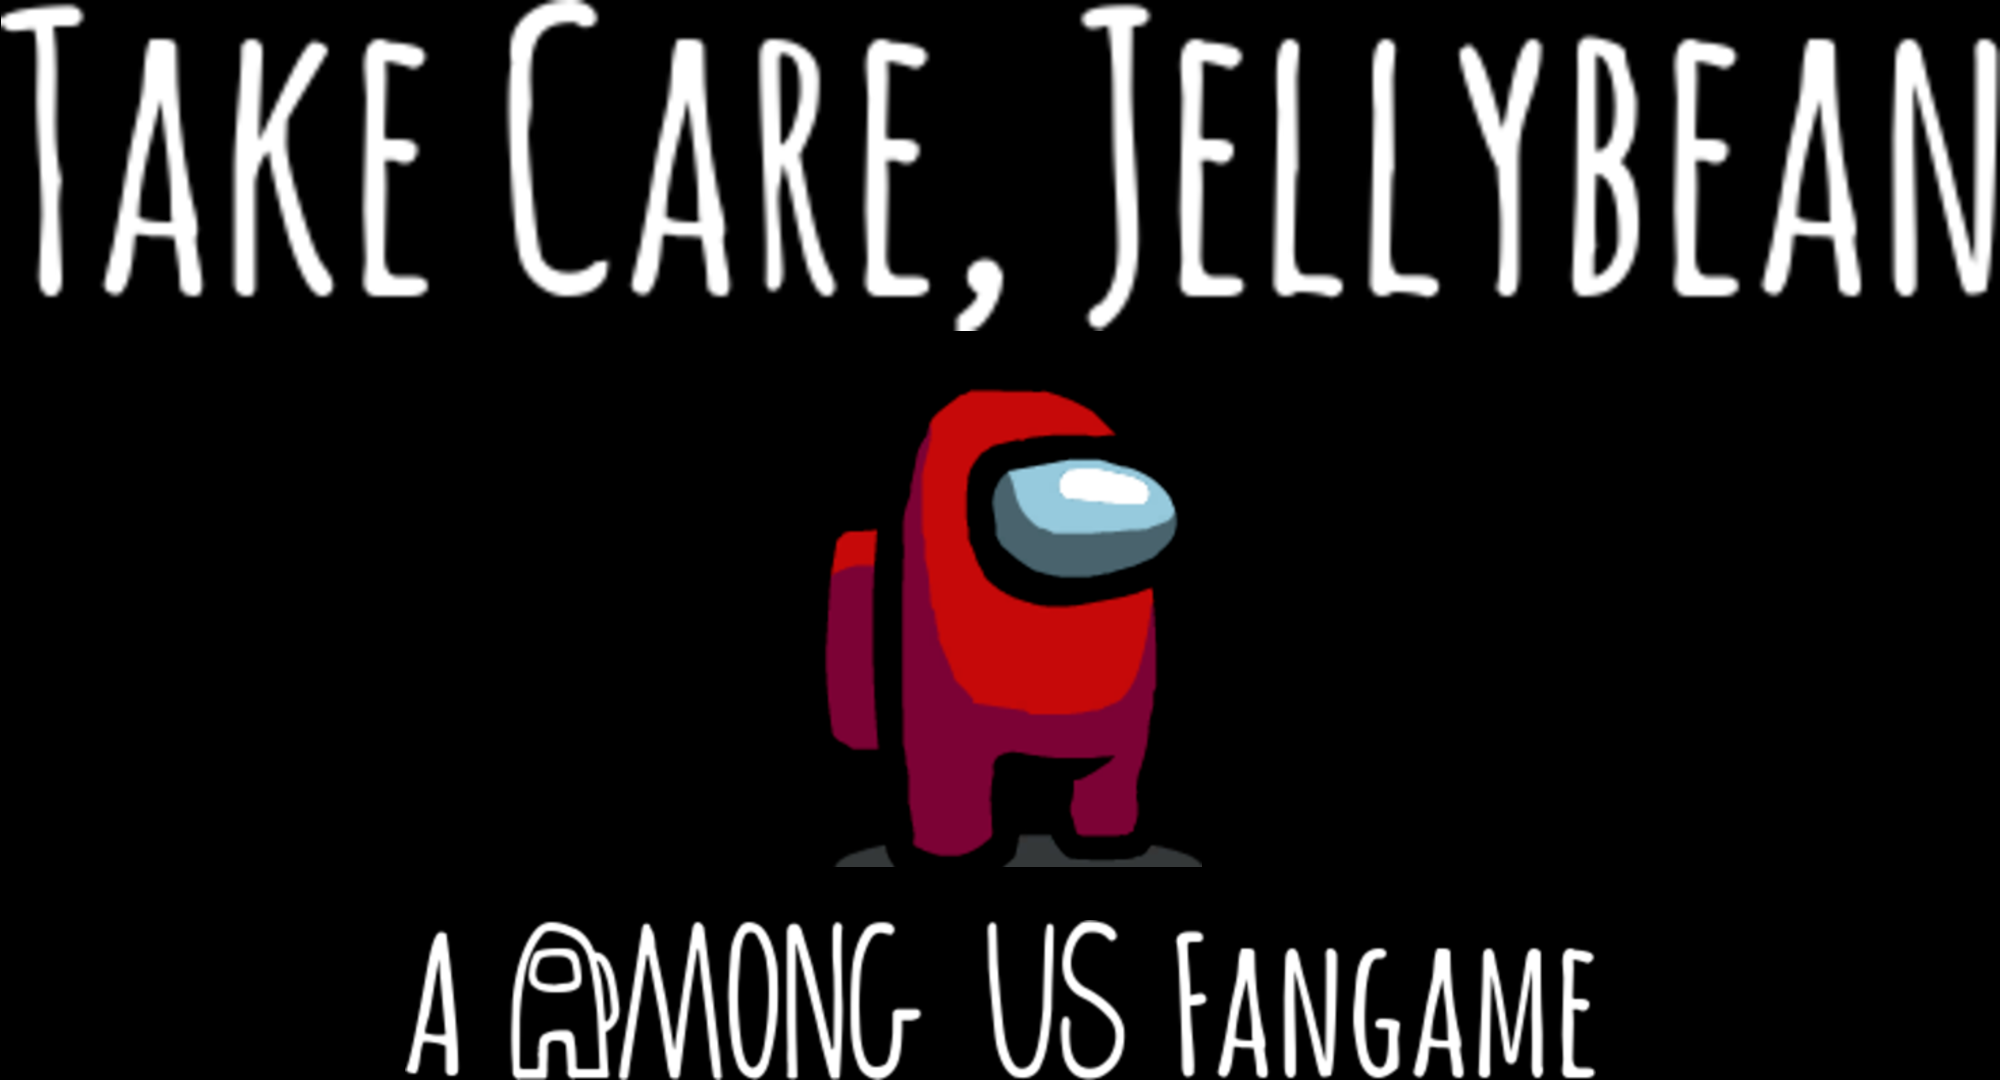 Take Care, Jellybean